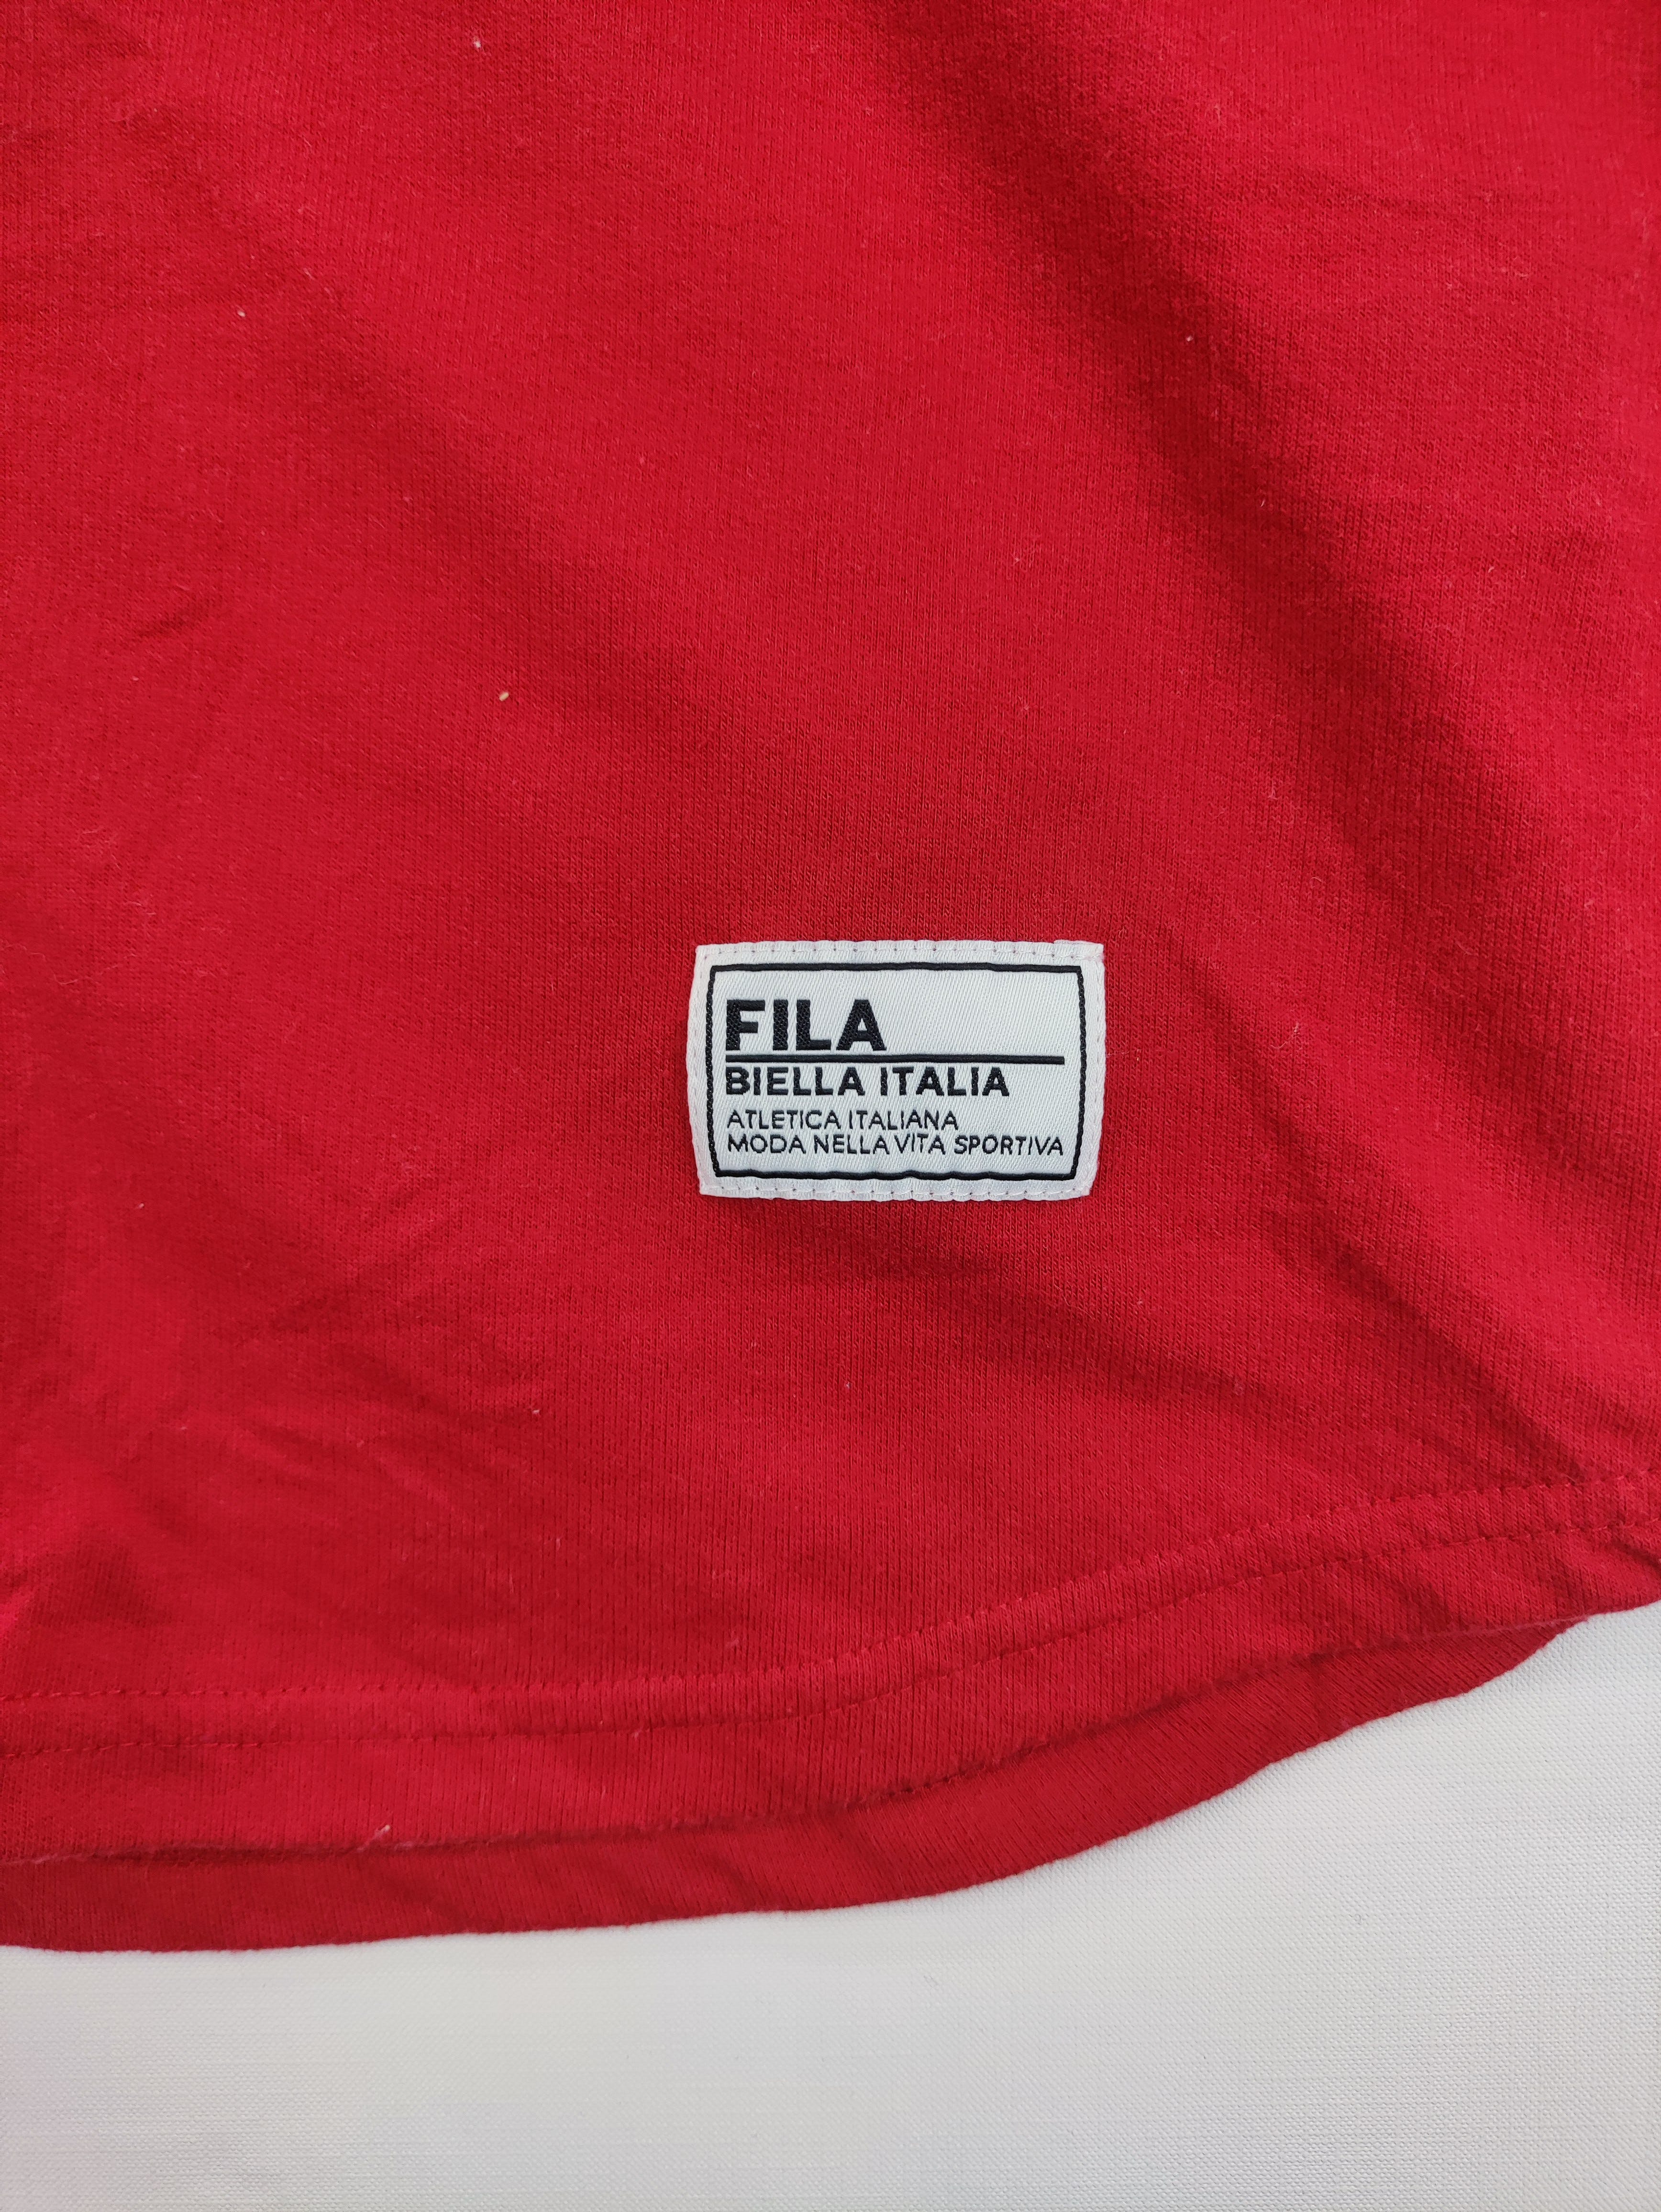 Vintage Fila Shirts Button Ups - 3